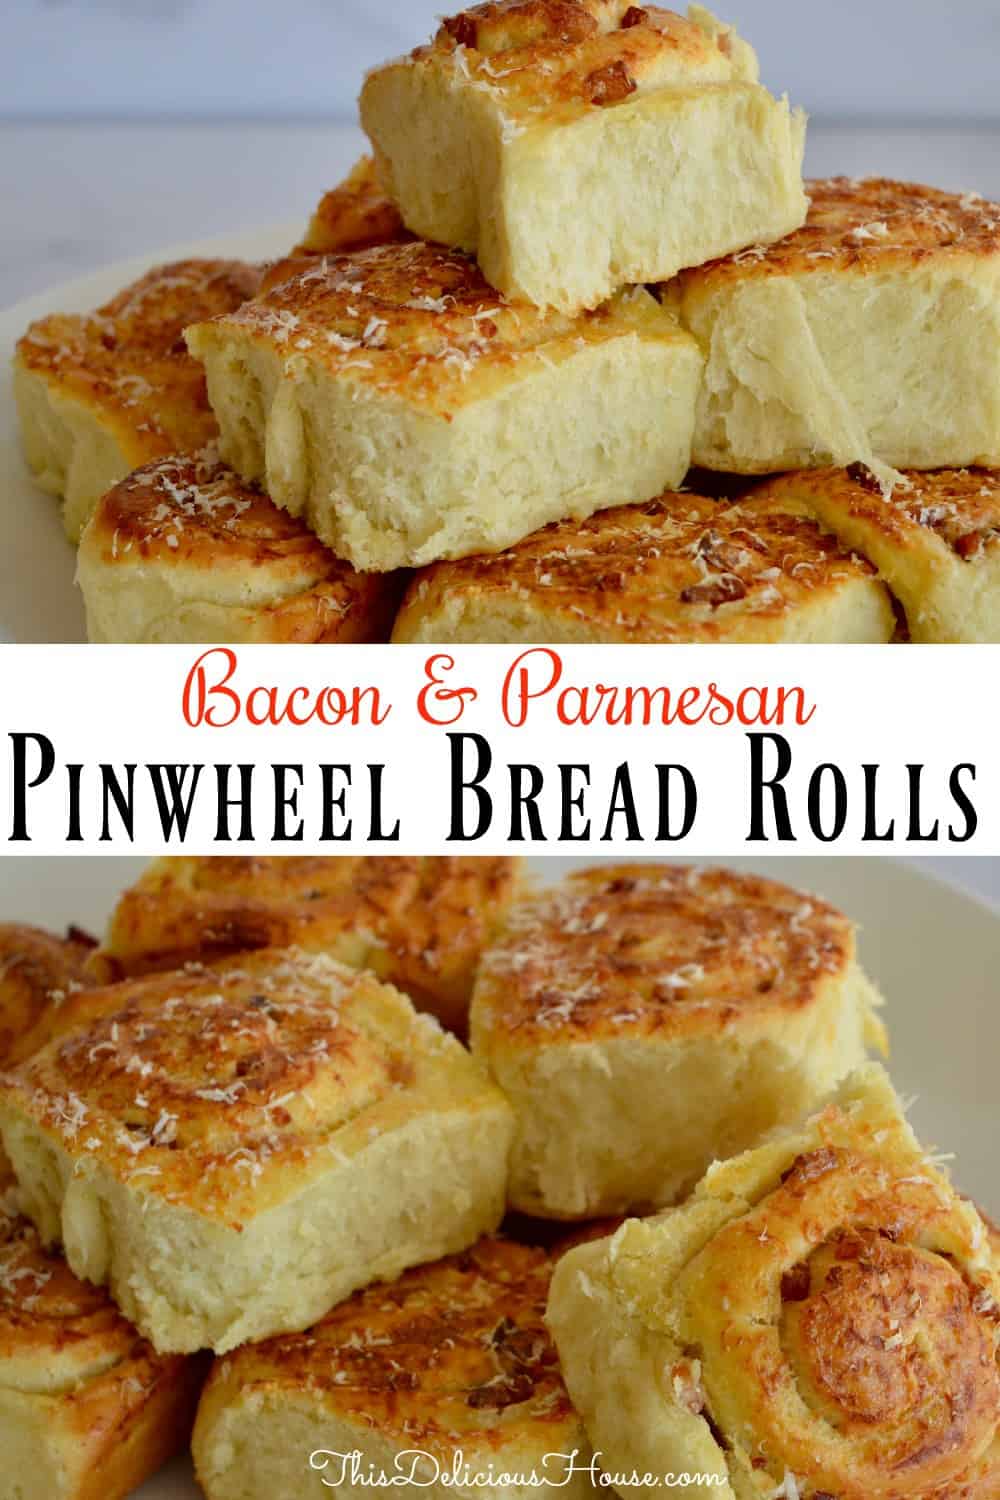 pinwheel bread rolls pinterest pin.